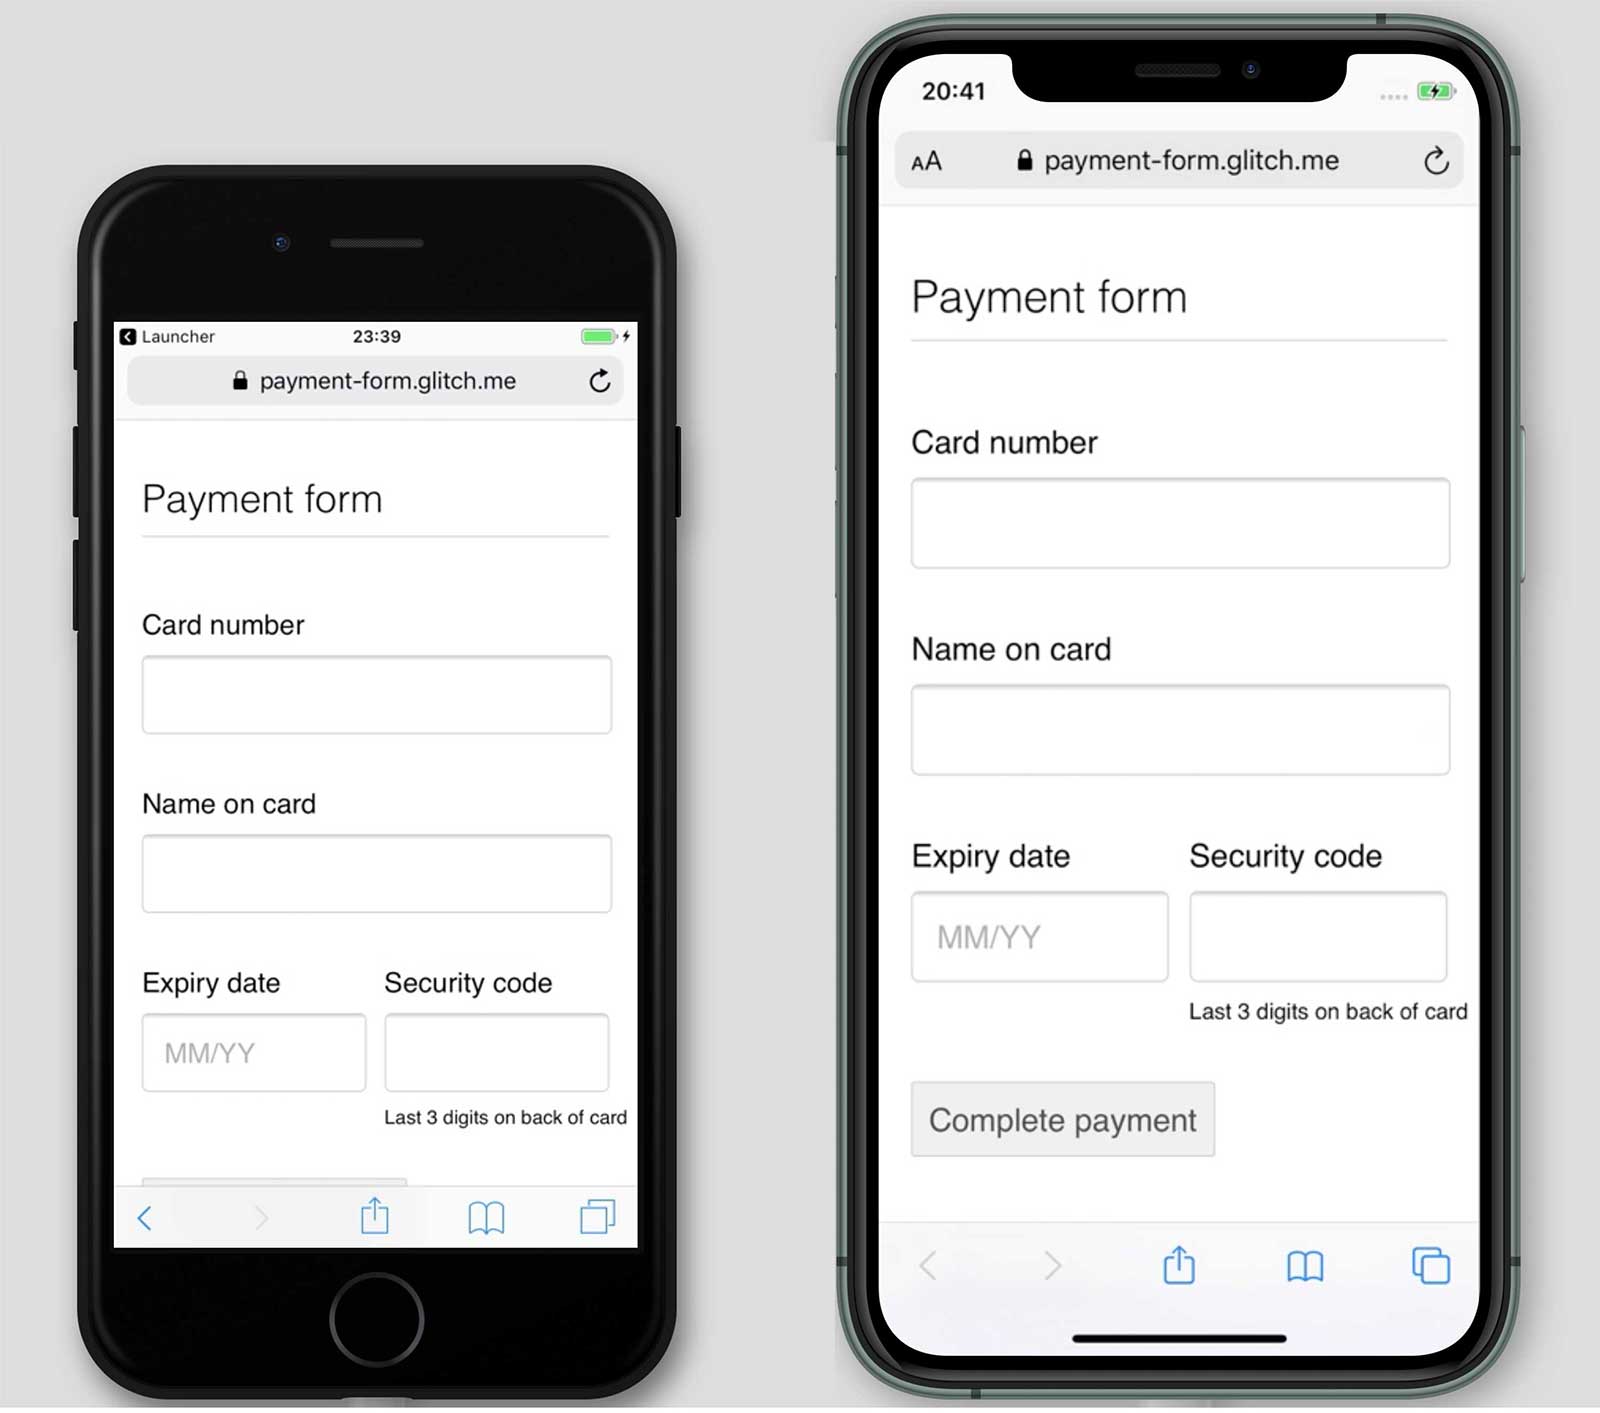 iPhone 7 및 11에 표시된 결제 양식(payment-form.glitch.me)의 스크린샷 결제 완료 버튼이 iPhone 11에는 표시되지만 7에는 표시되지 않음